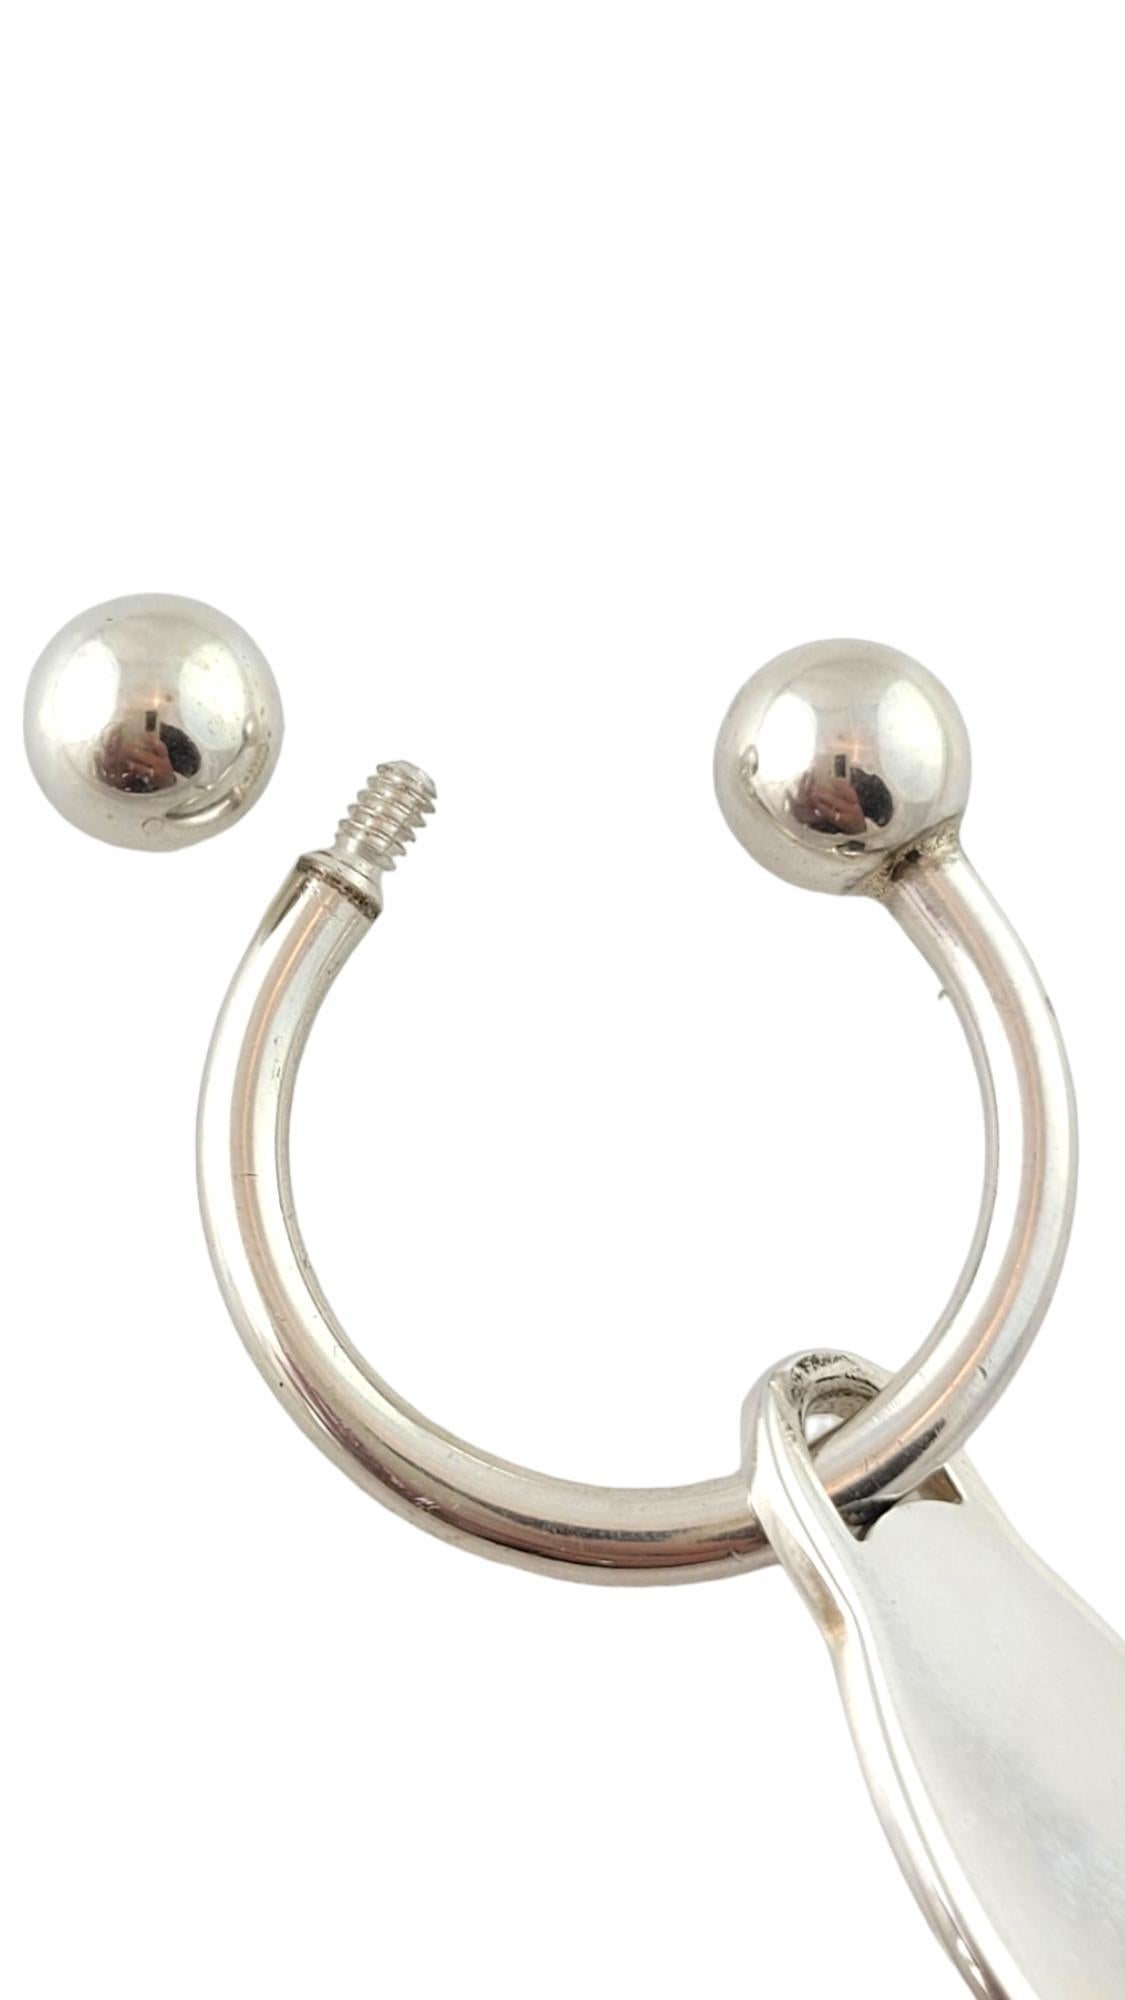 Tiffany & Co Sterling Silver Oval Tag Screwball Key Ring #17412 1